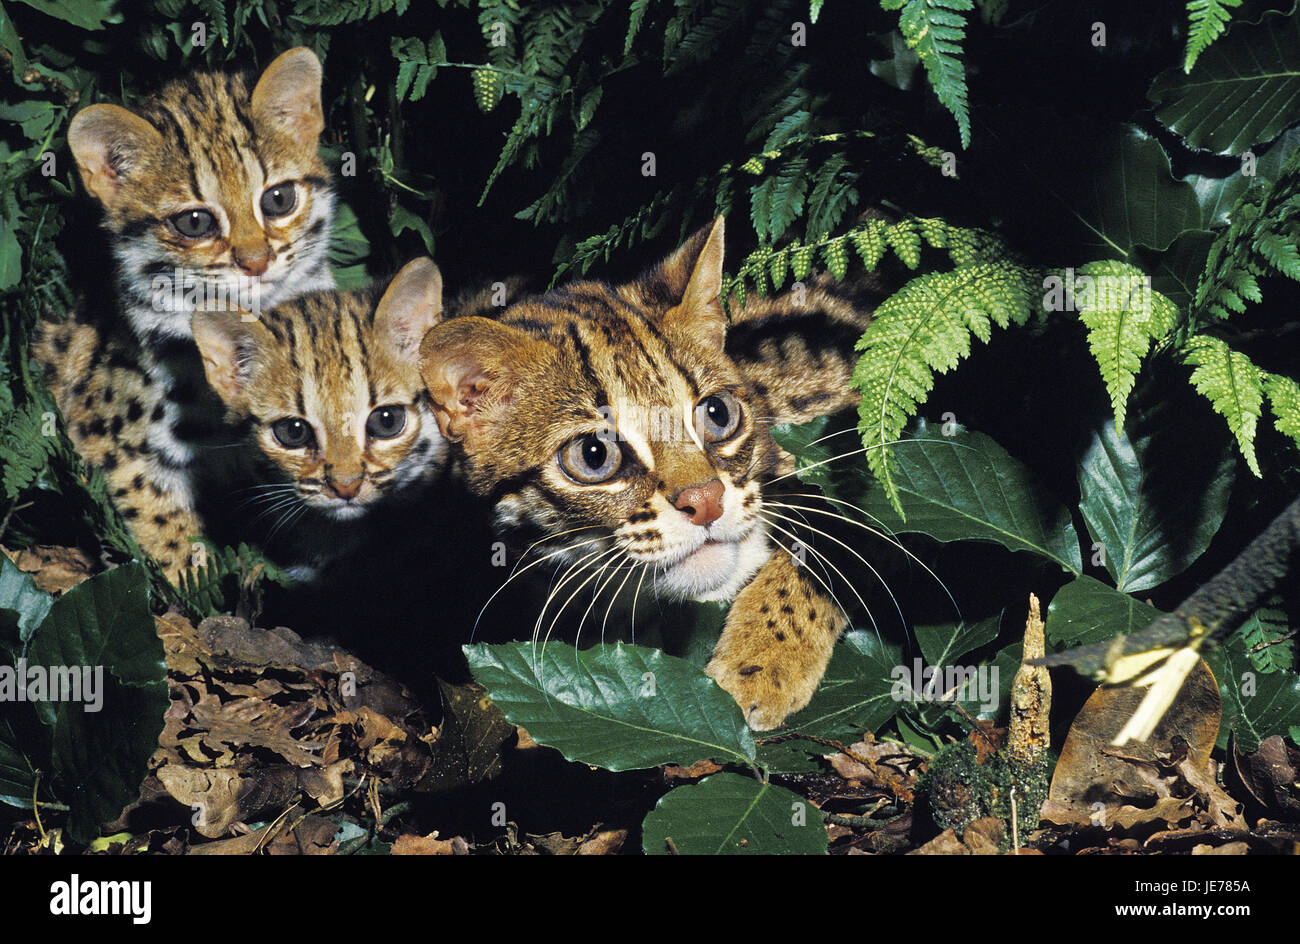 Bengalkatzen, Prionailurus Bengali's sis, also leopard's cat, female, young, Stock Photo